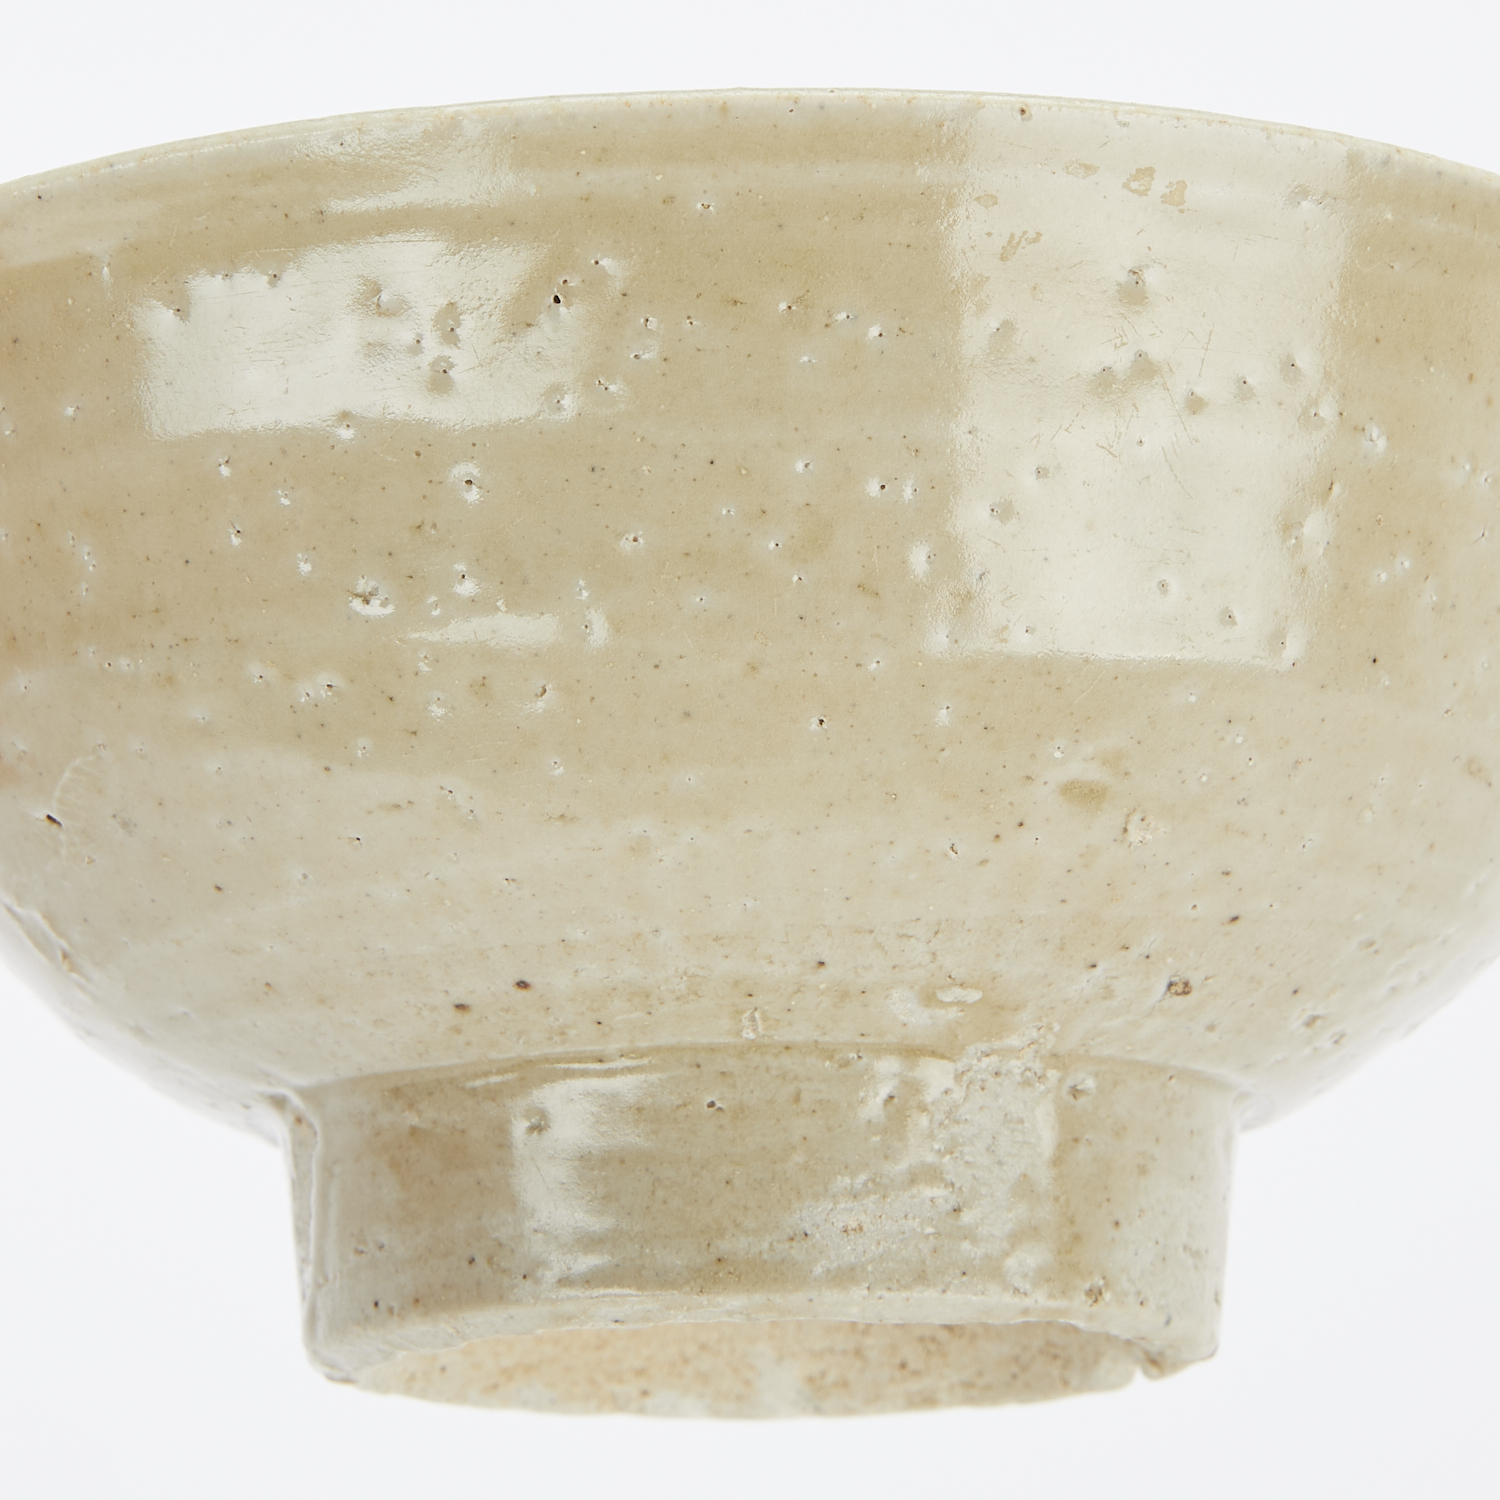 2 Chinese Song Ceramic Glazed Bowls - Image 11 of 12